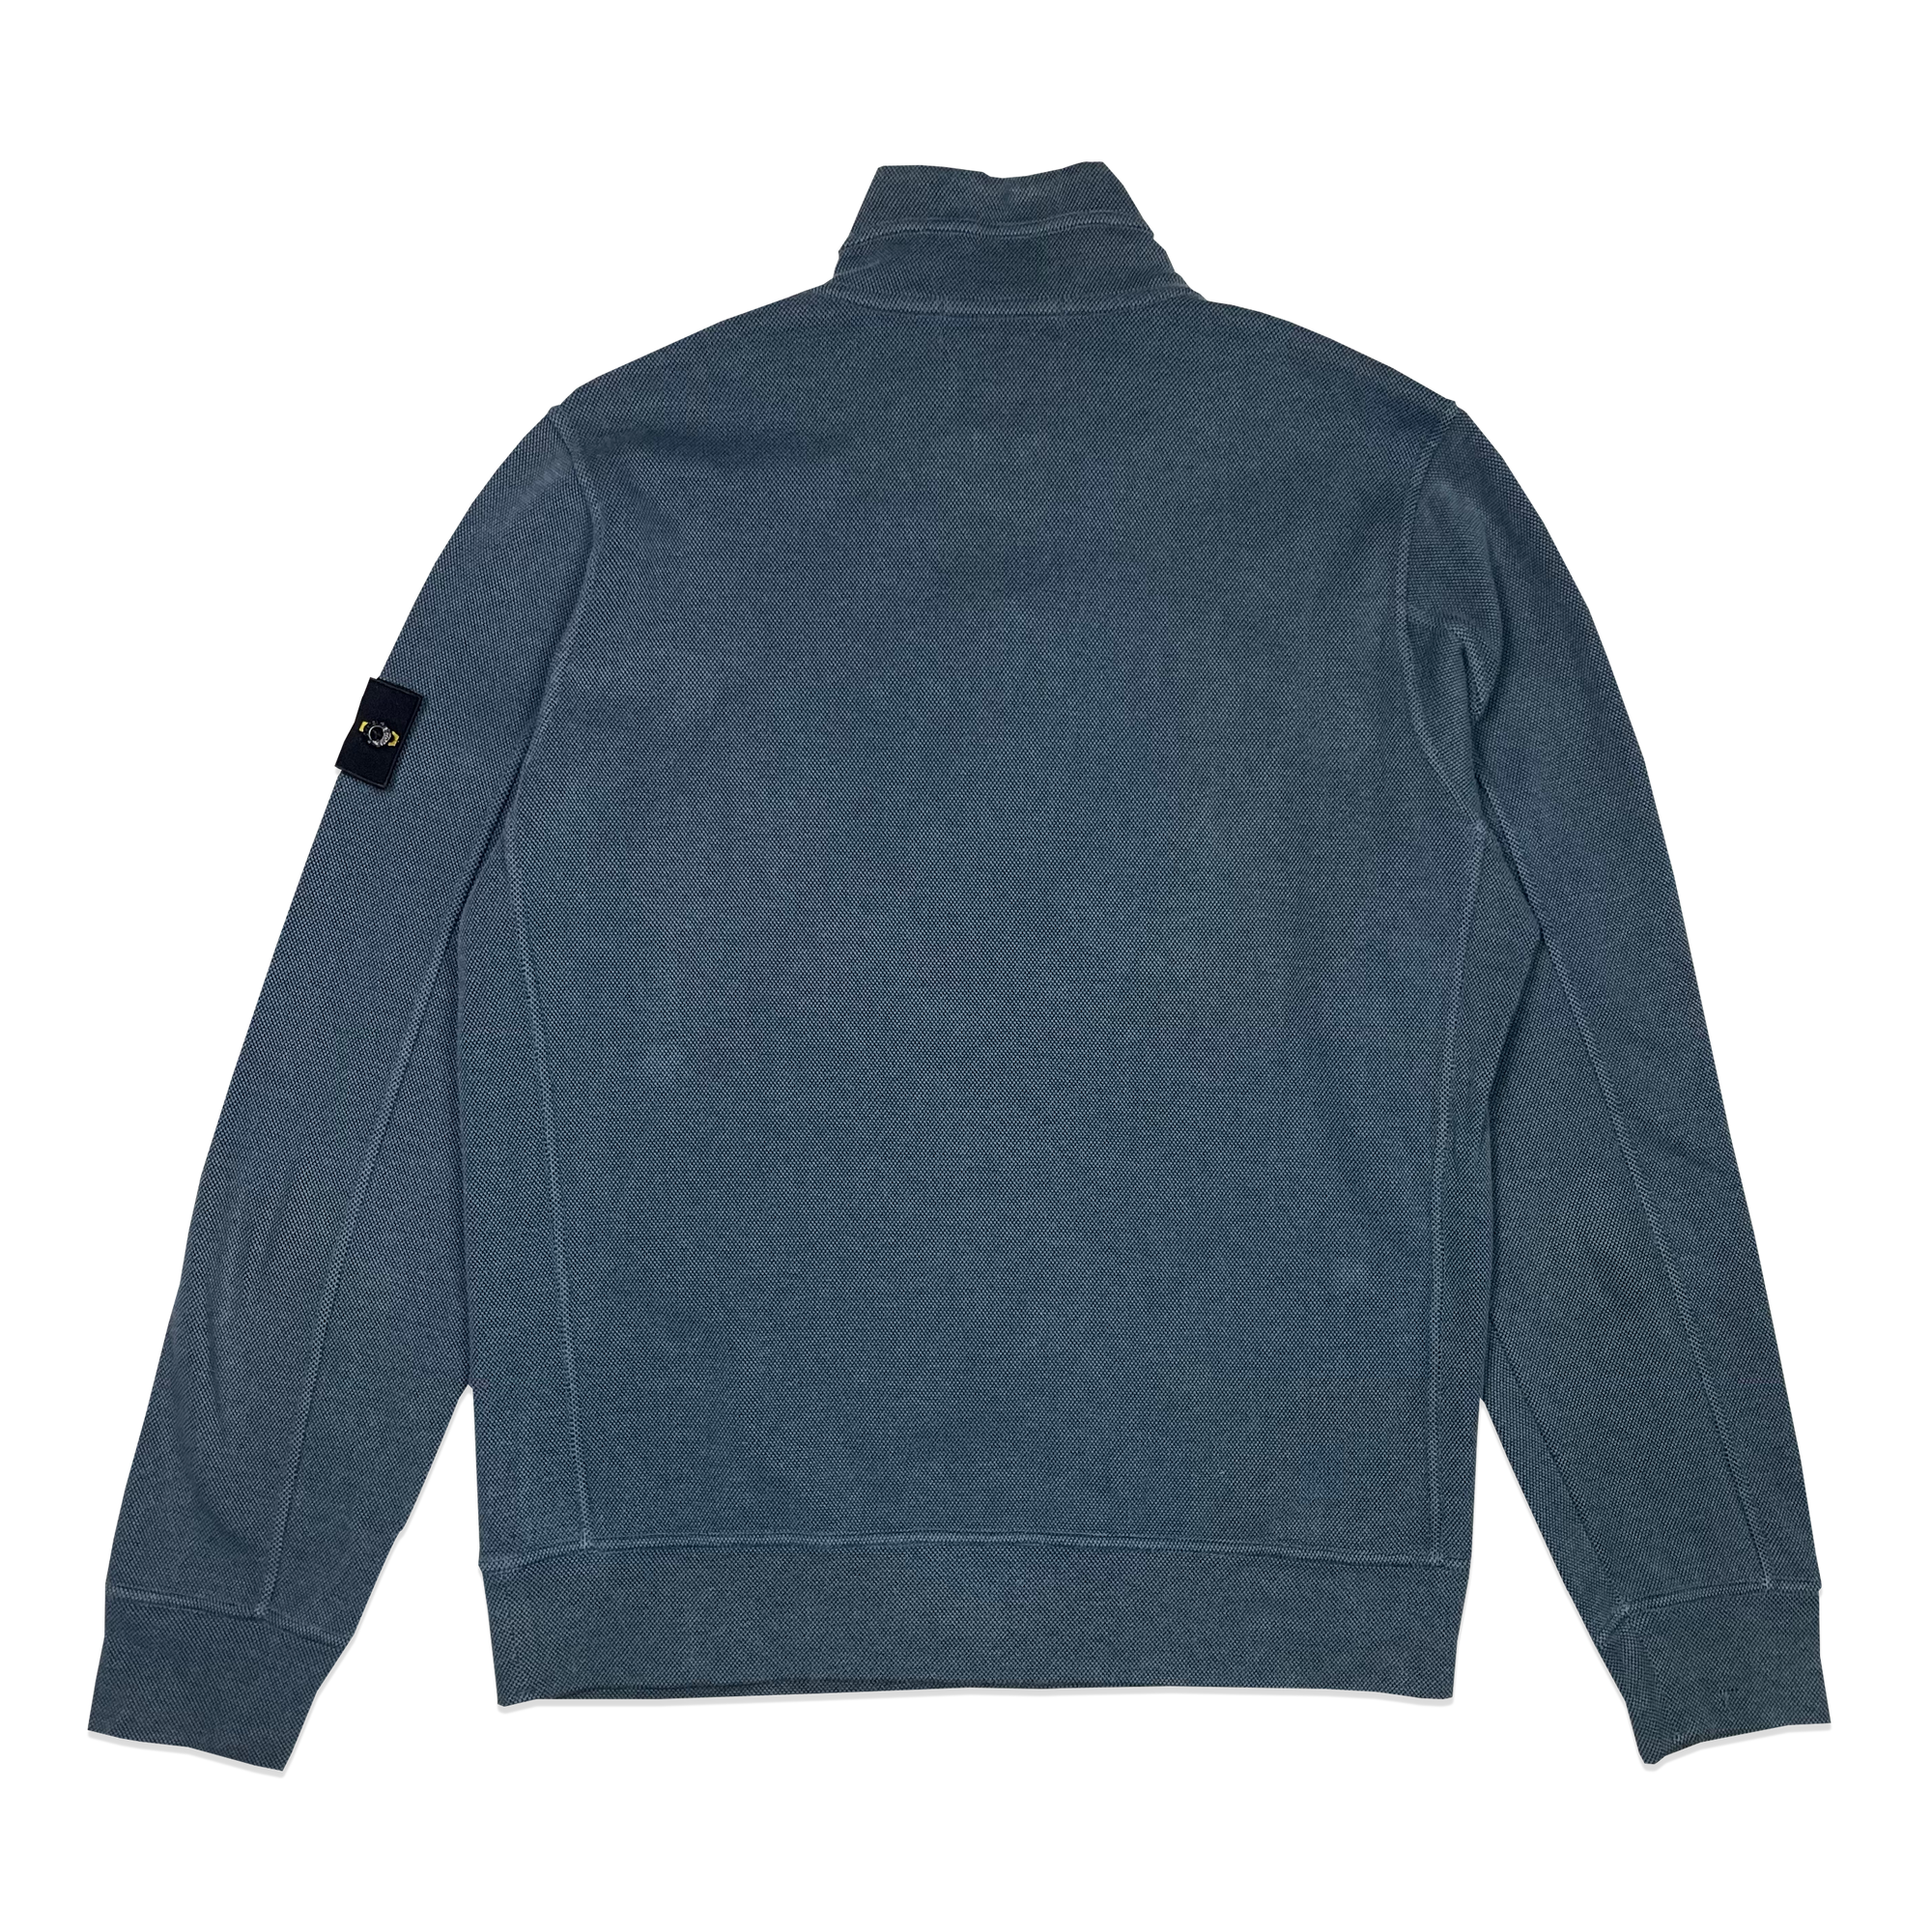 Sweatshirt Half-Zip 2018 - Stone Island - Bleu